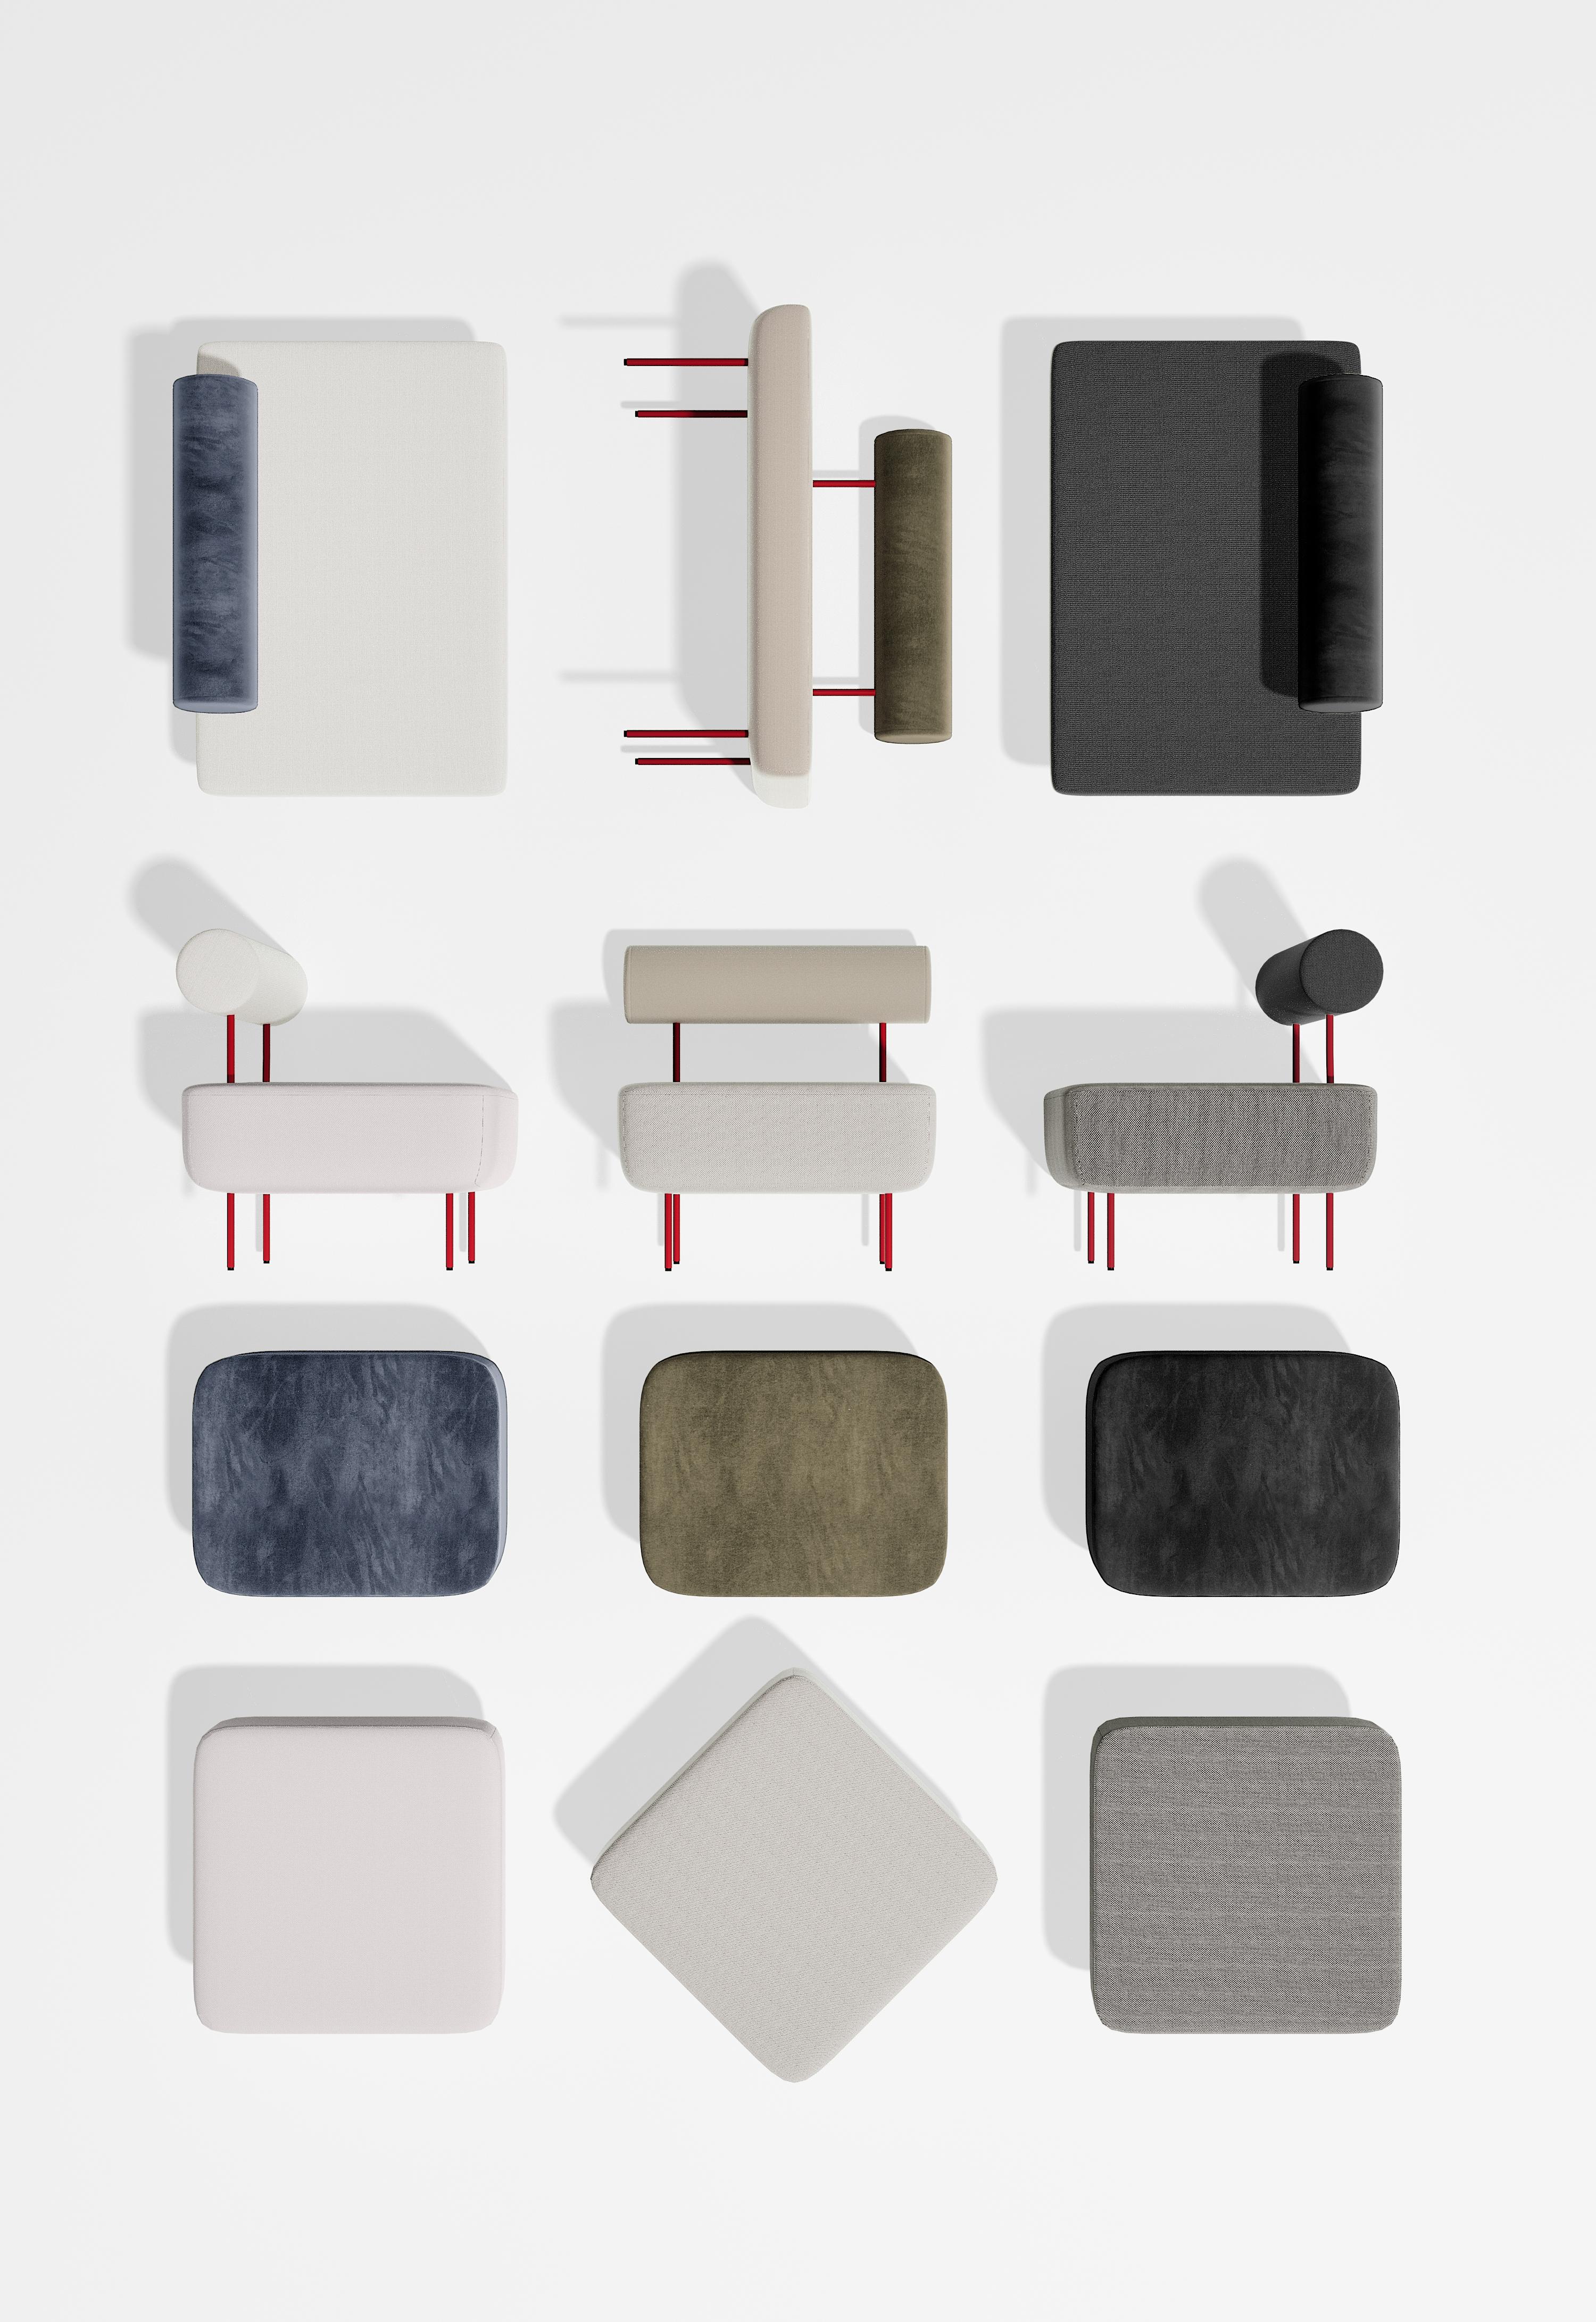 Upholstery Petite Friture Small Hoff Stool in Grey-Beige by Morten & Jonas, 2015 For Sale